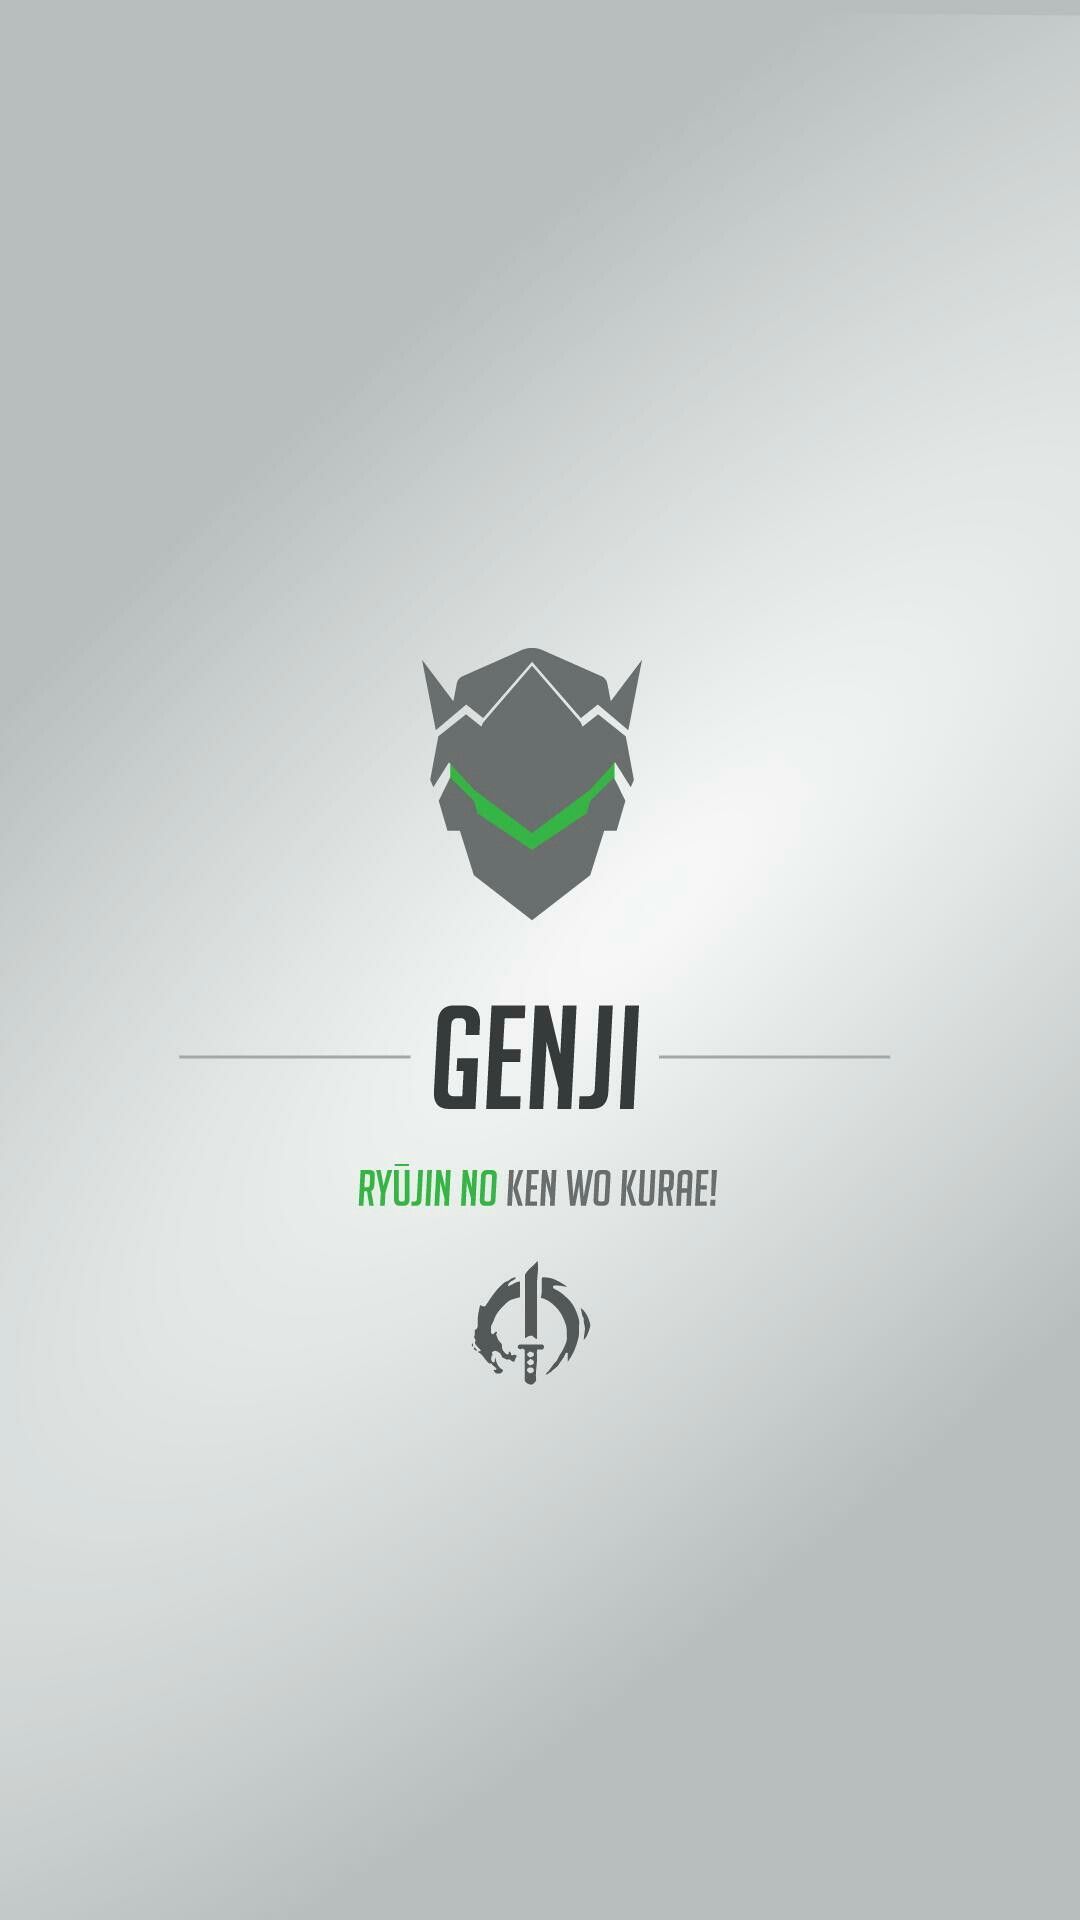 Genji Overwatch. Overwatch wallpaper, Overwatch genji